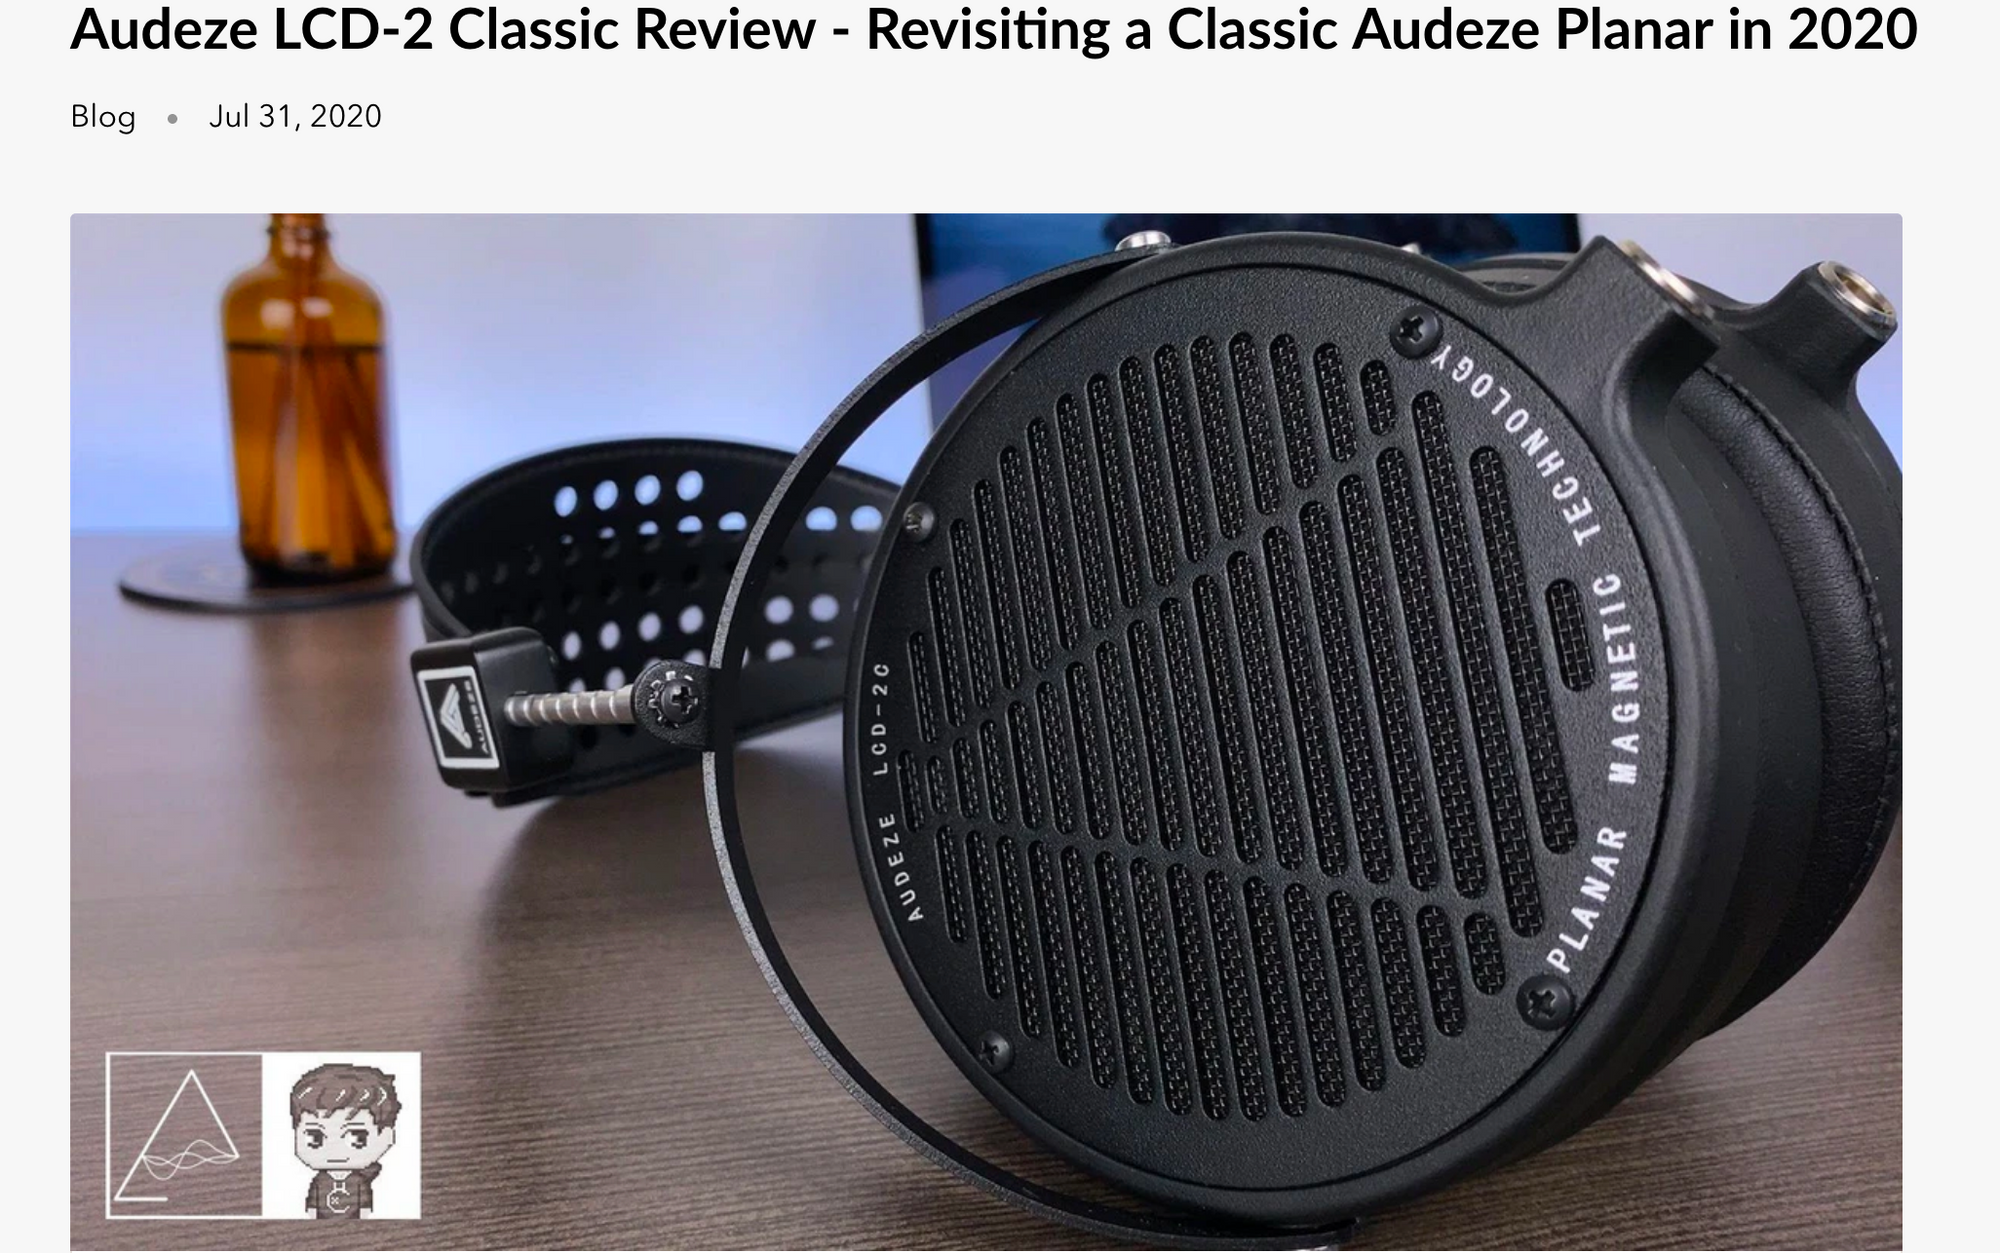 Headphones.com Reviews the Audeze LCD-2